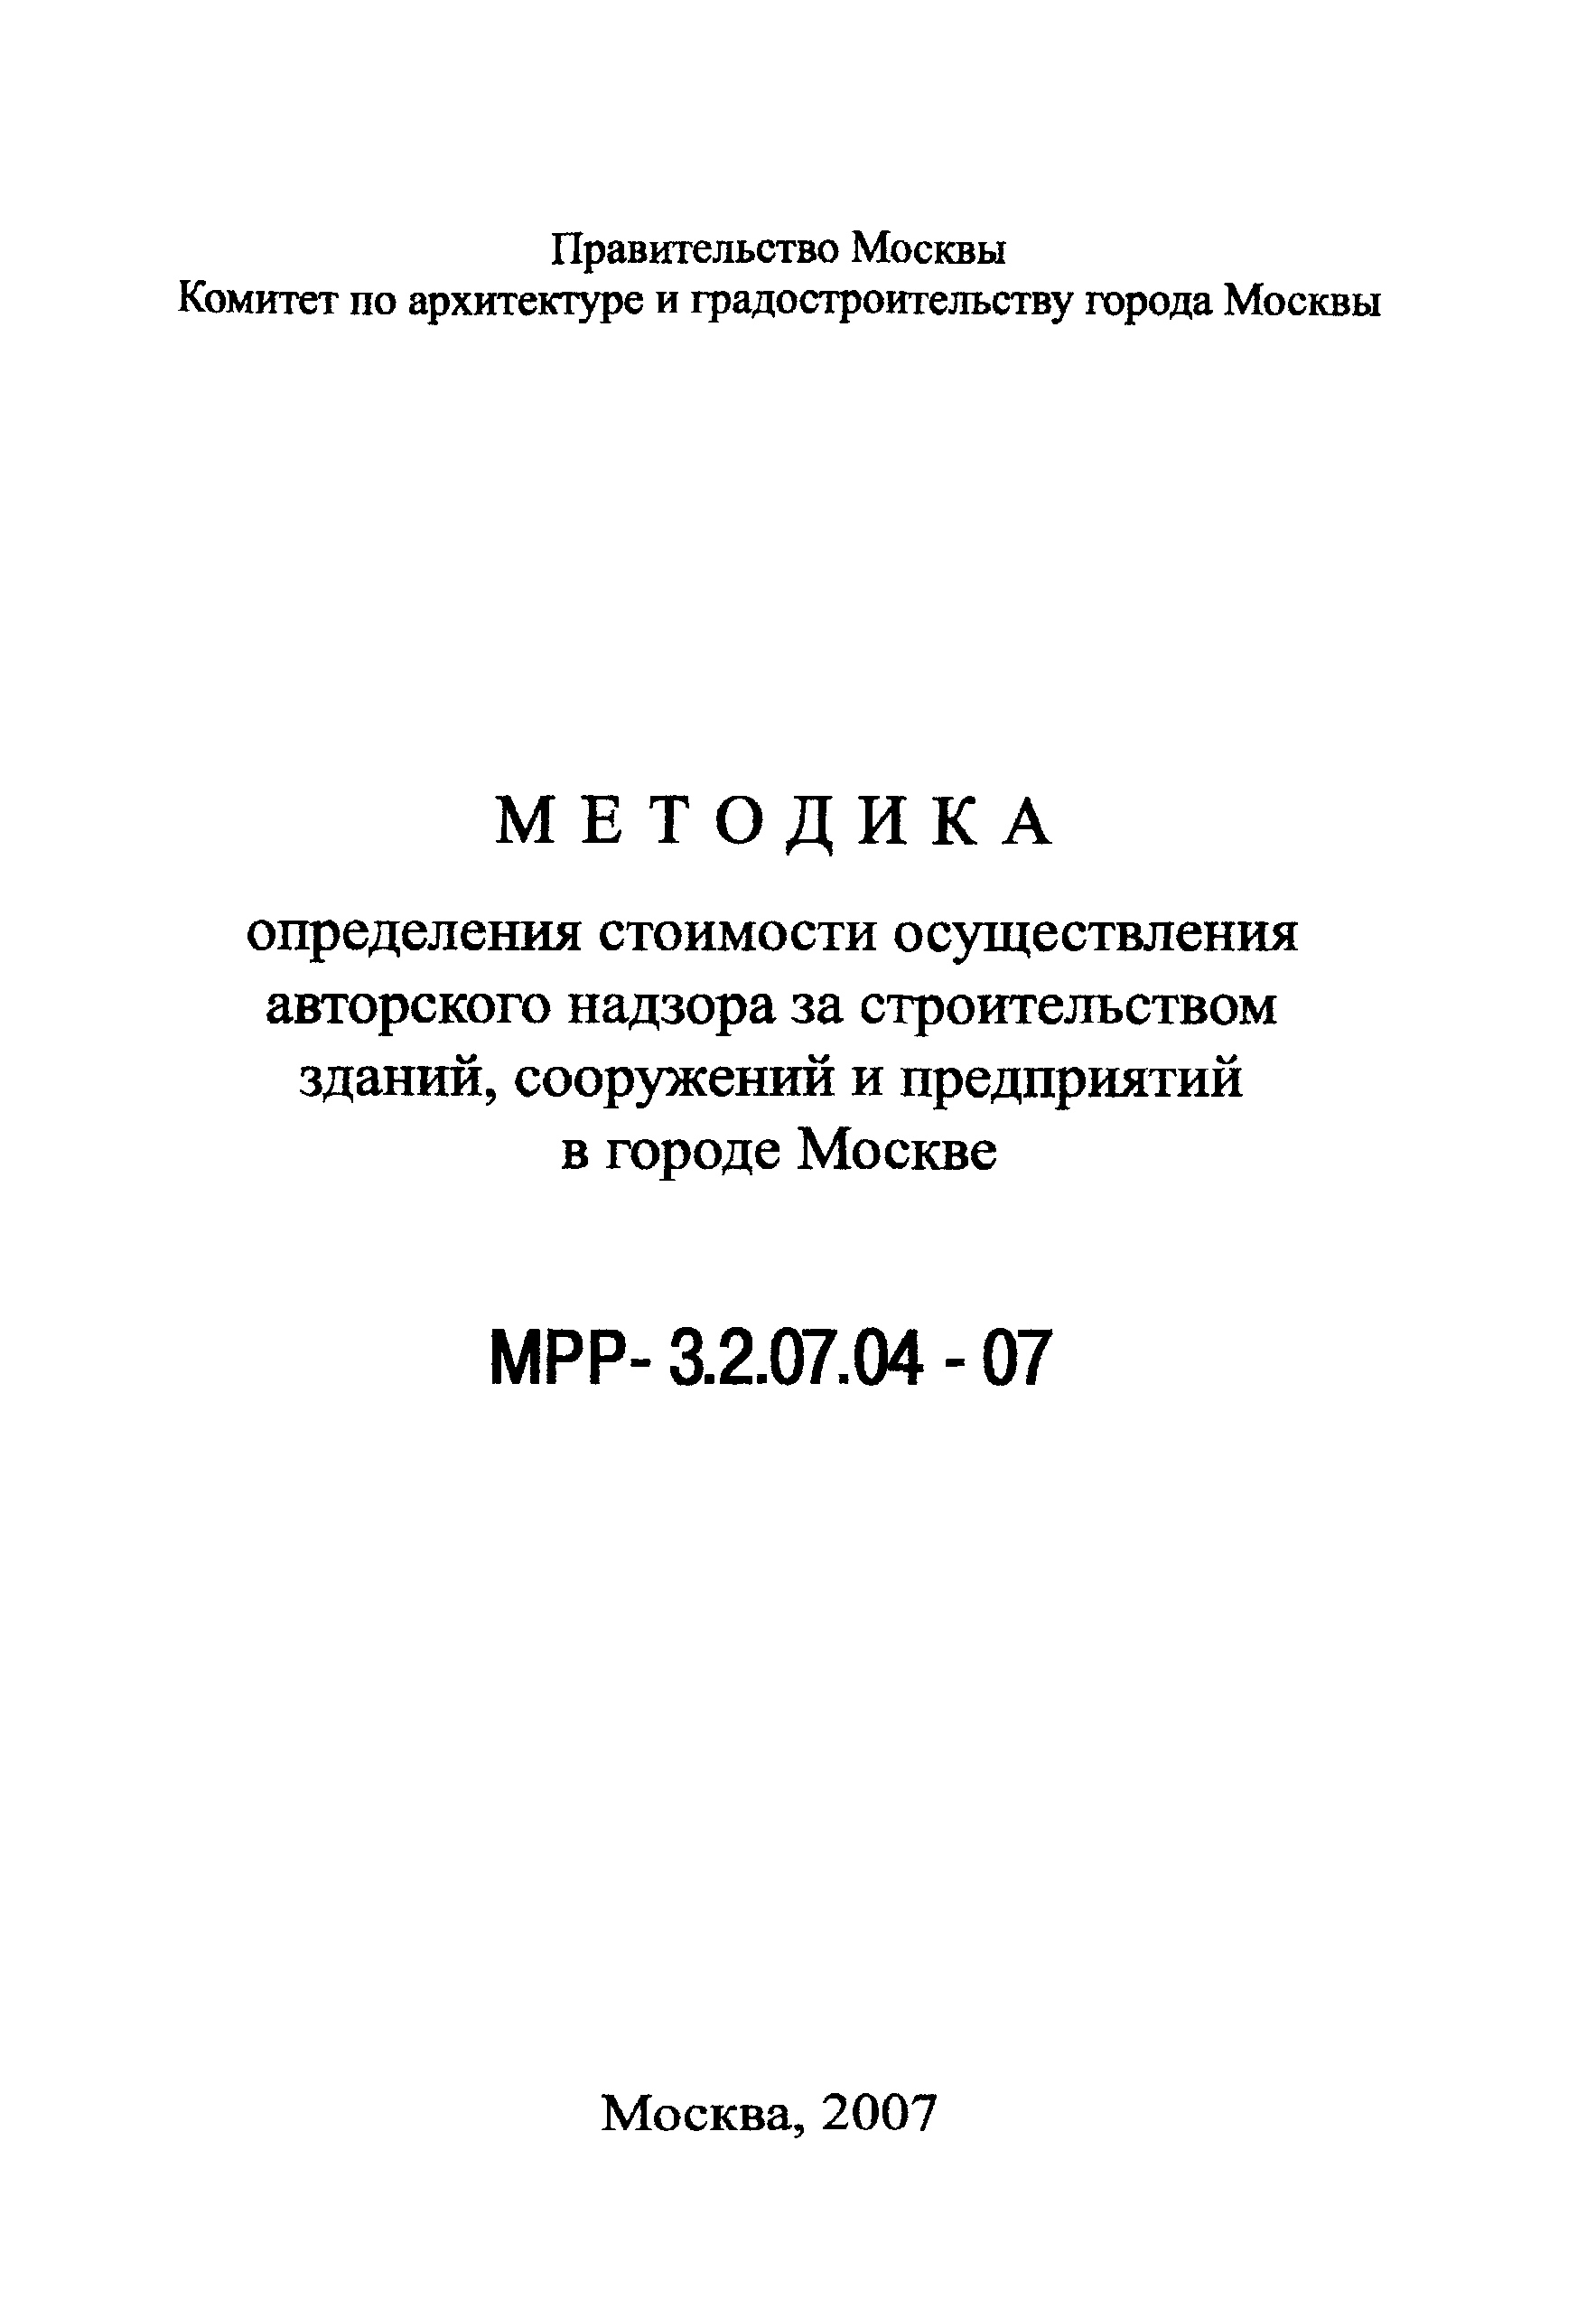 МРР 3.2.07.04-07